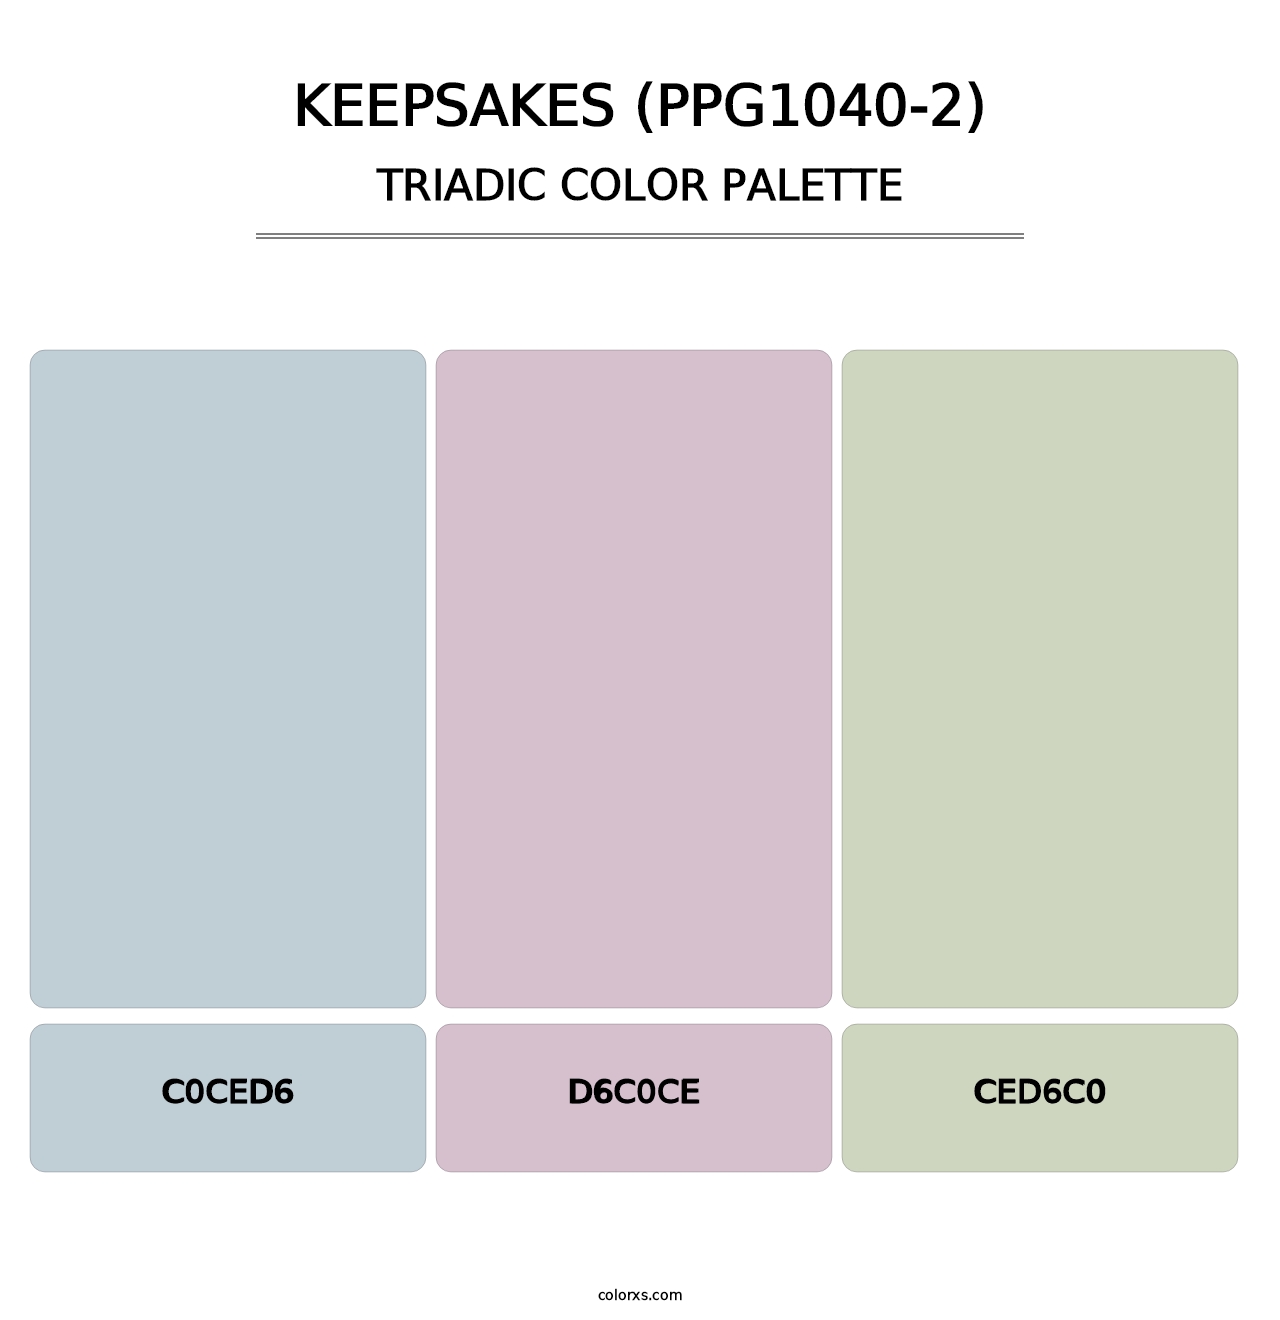 Keepsakes (PPG1040-2) - Triadic Color Palette